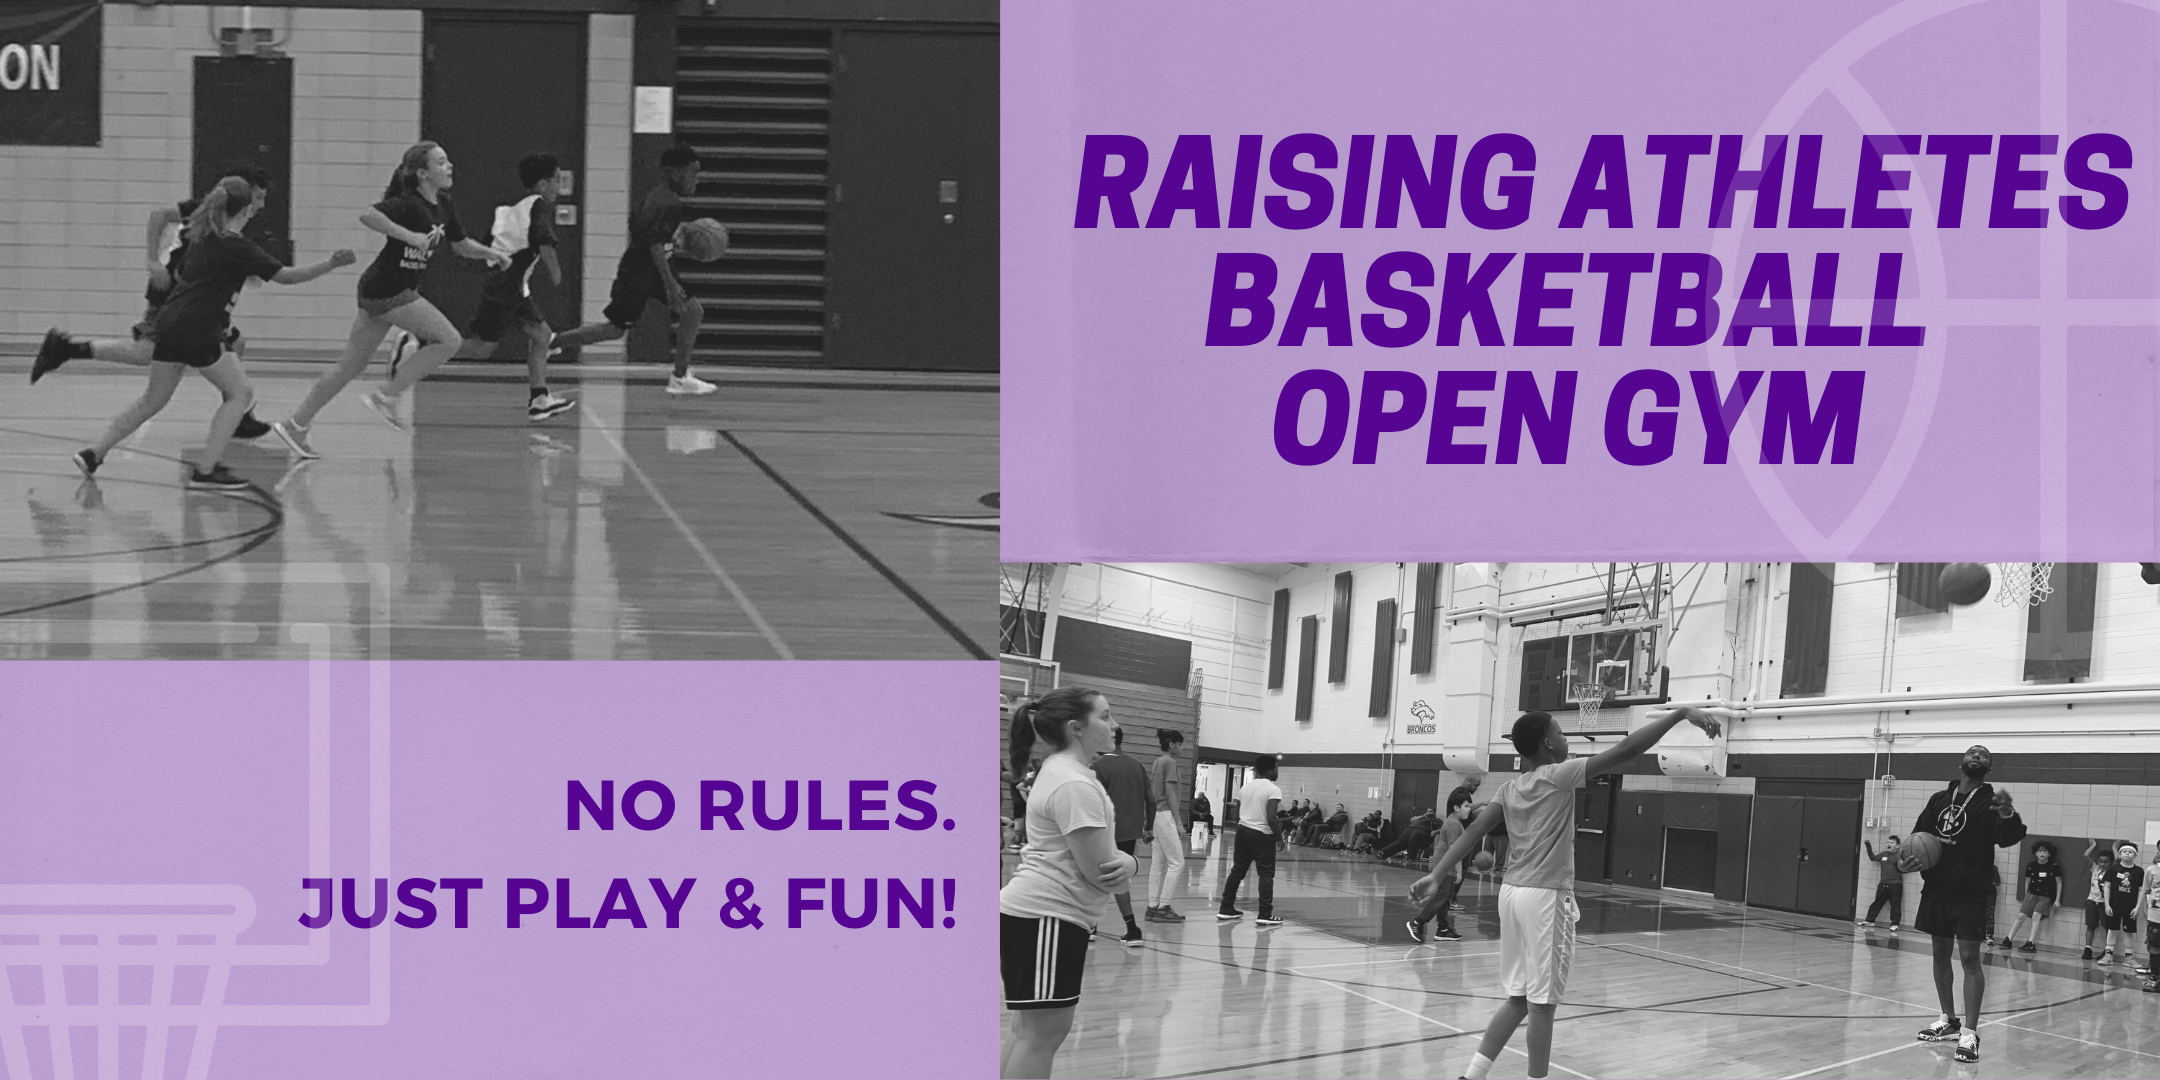 FREE - Raising Athletes Basketball Open Gym